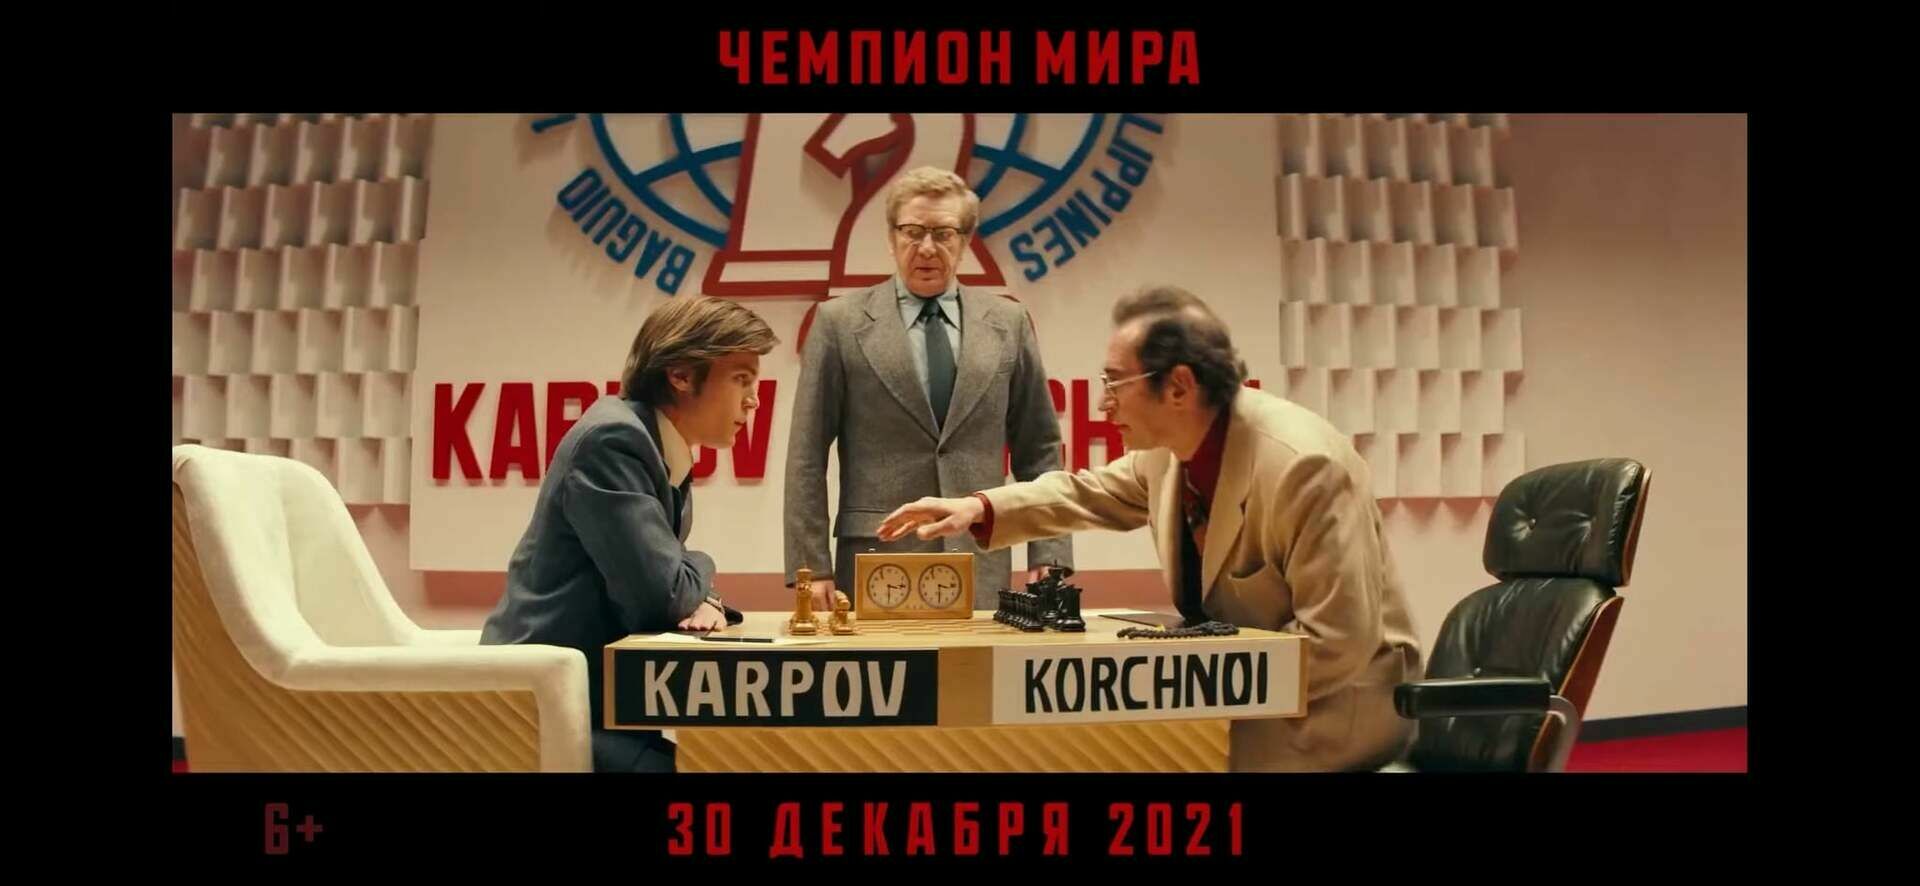 Good Karpov vs. Bad Korchnoi: the film "World Champion" was released